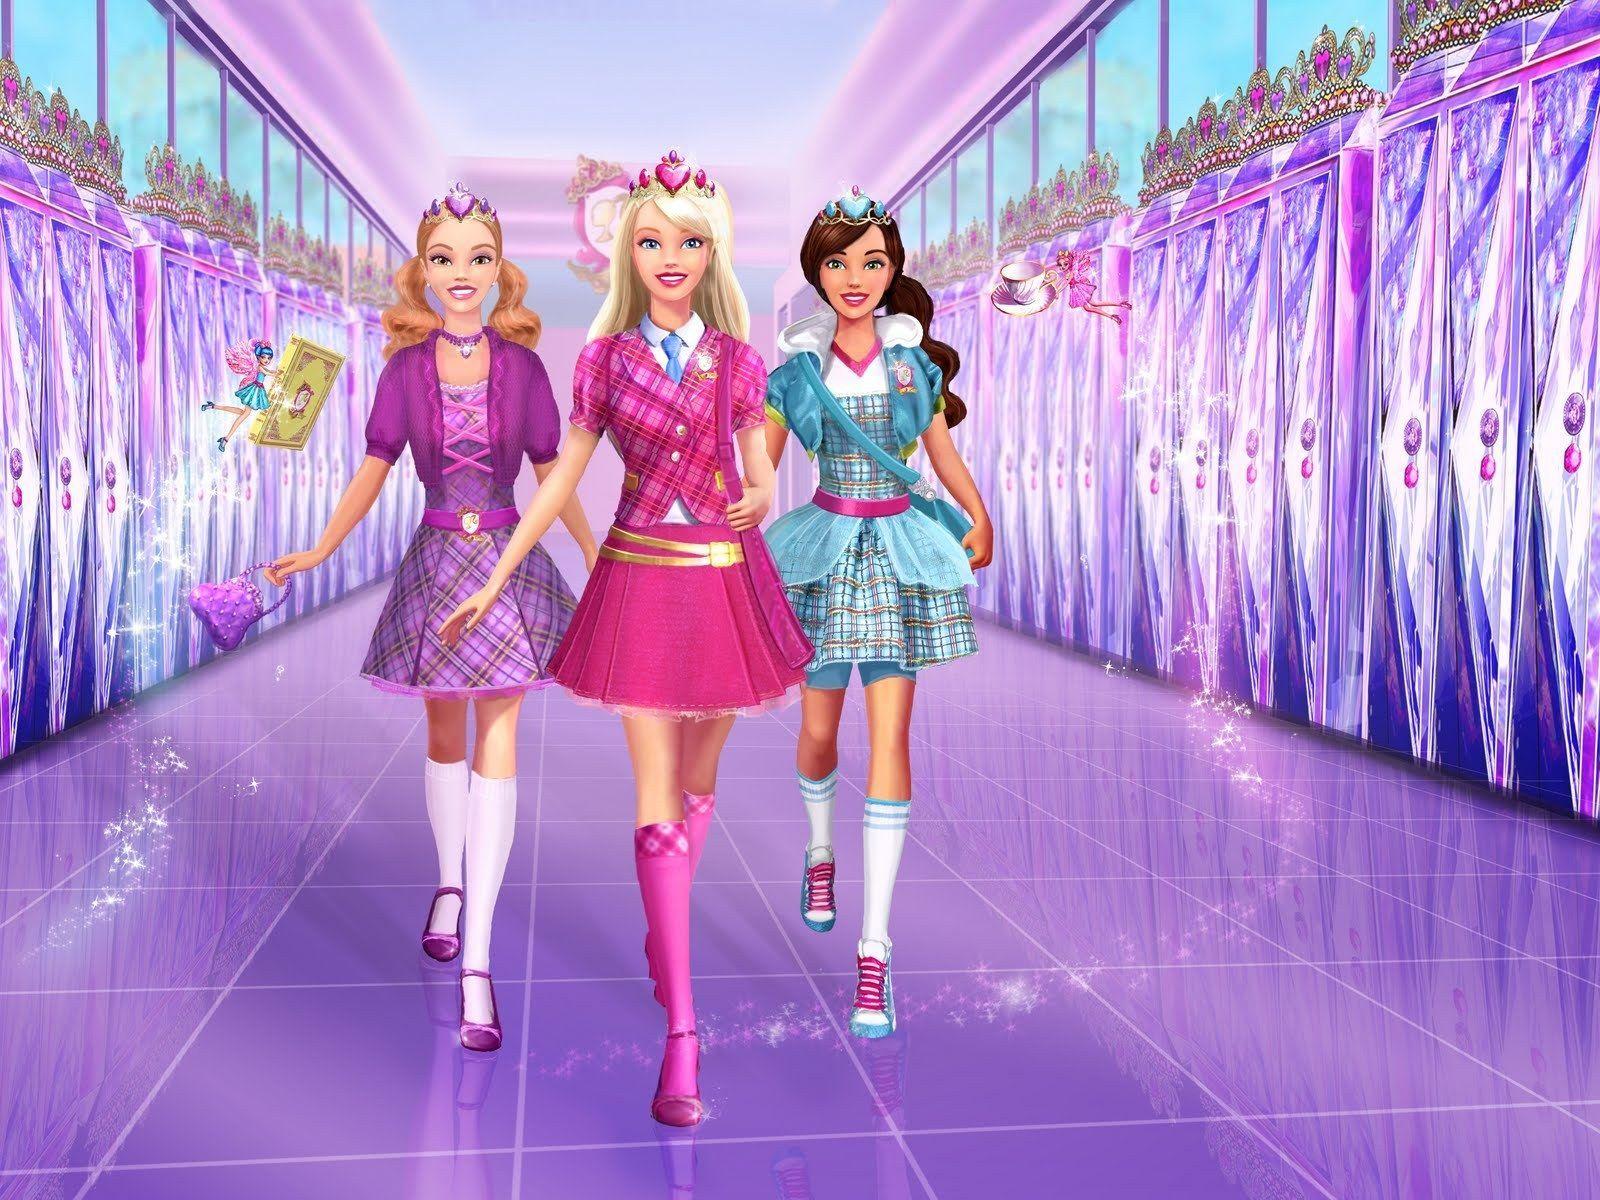 Barbie Movie HD Wallpaper Free Download. NEW HD Wallpaper